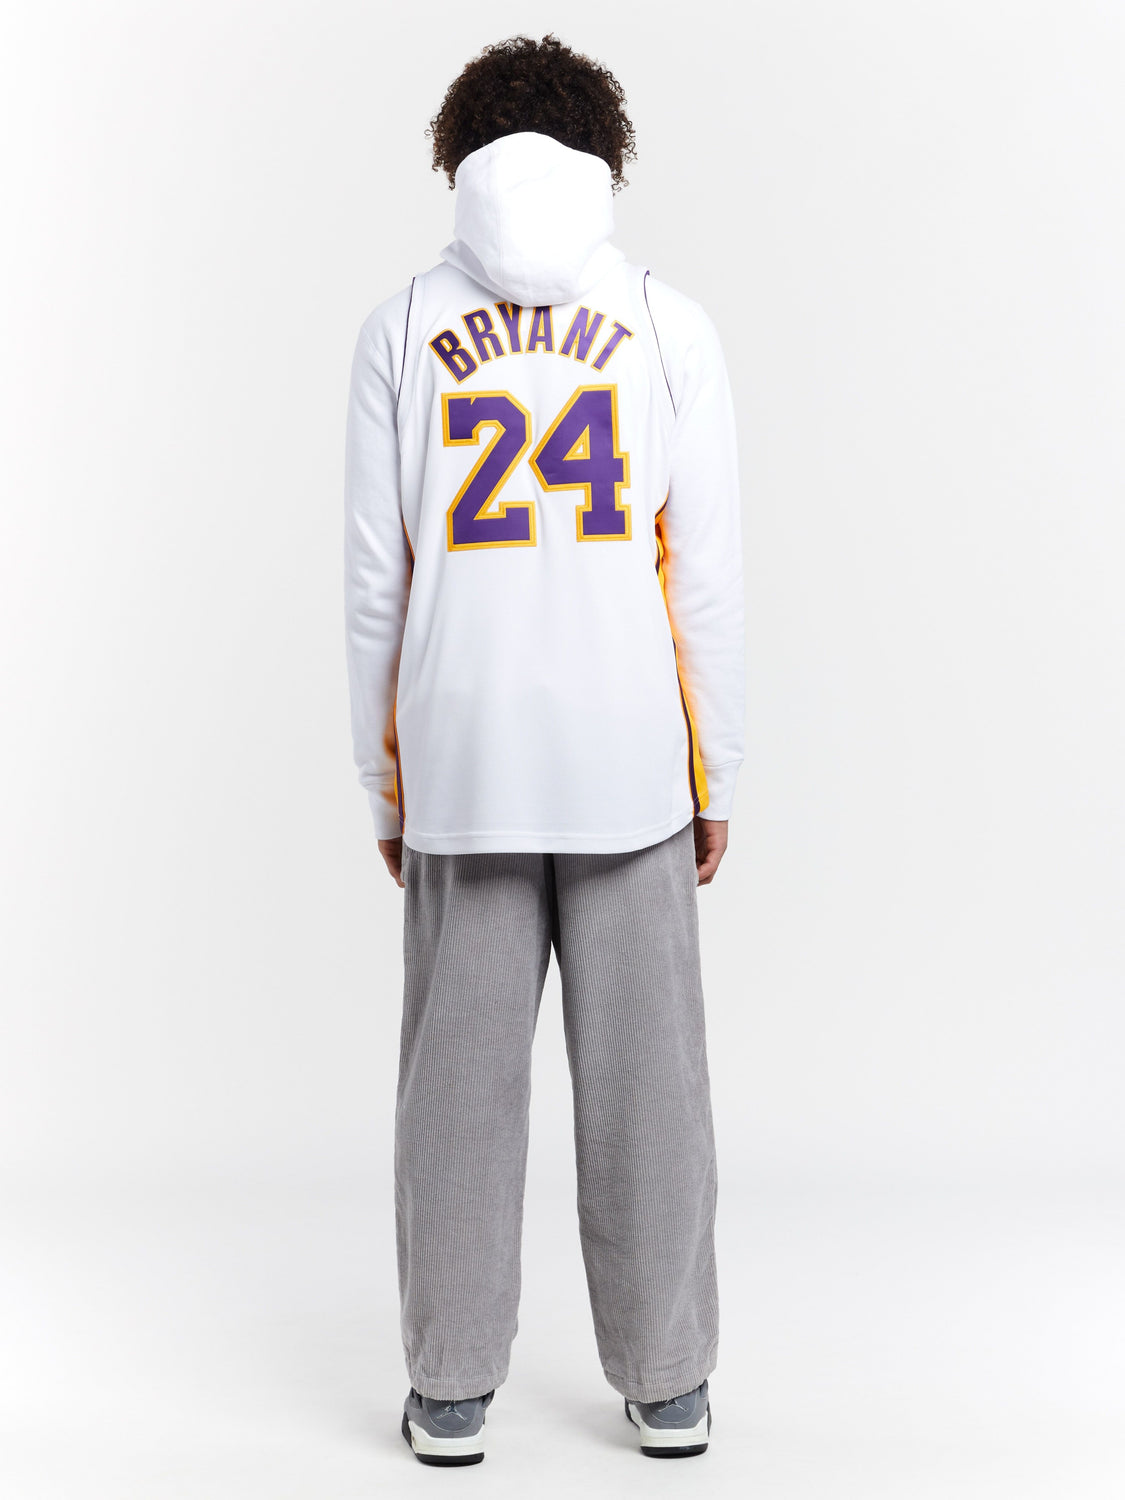 Mitchell & Ness NBA AUTHENTIC JERSEY ALL STAR WEST 2009 KOBE BRYANT #24  White - white